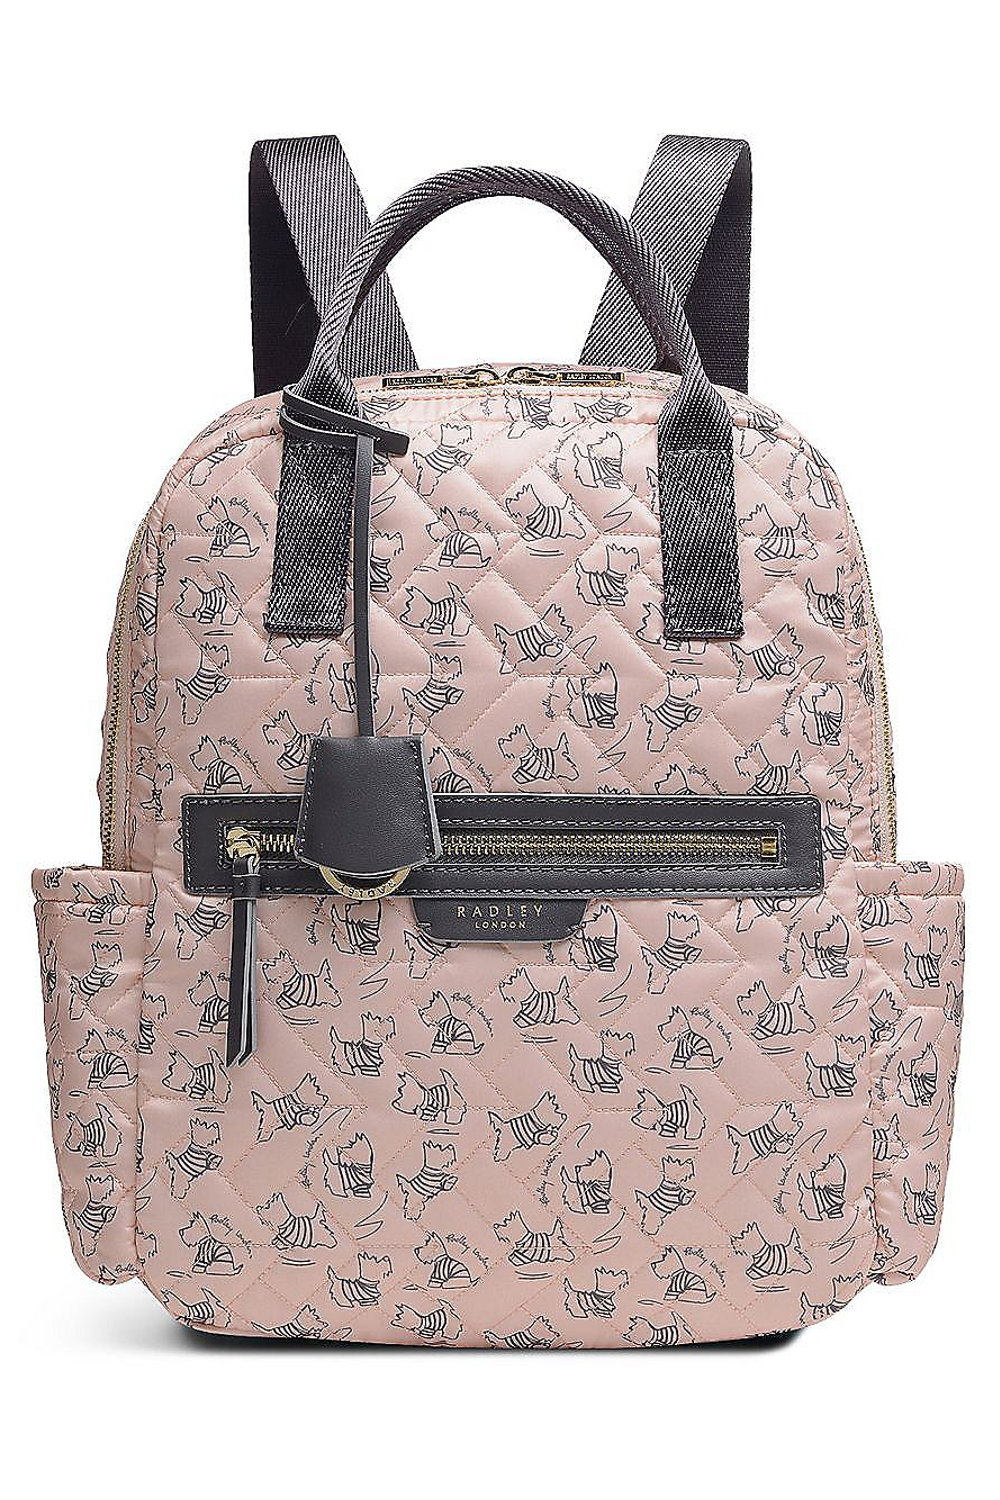 Radley London Women's Bag Backpack Handbag In Black | eBay